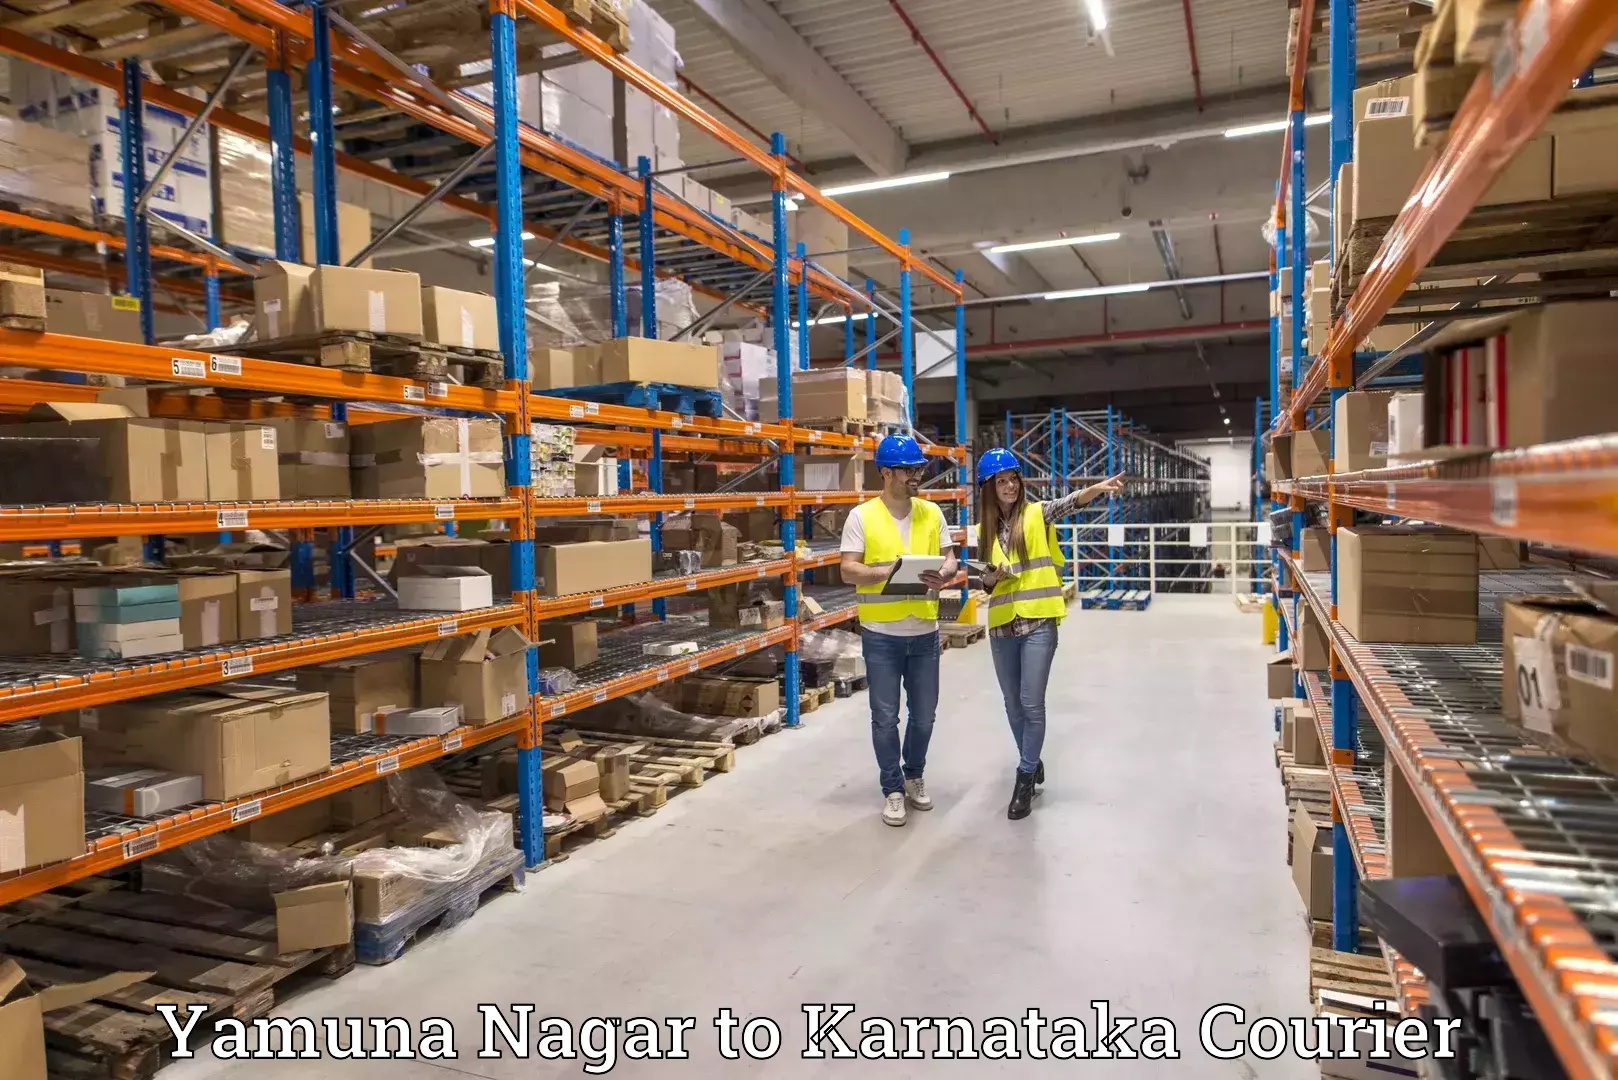 Express logistics providers Yamuna Nagar to Karnataka